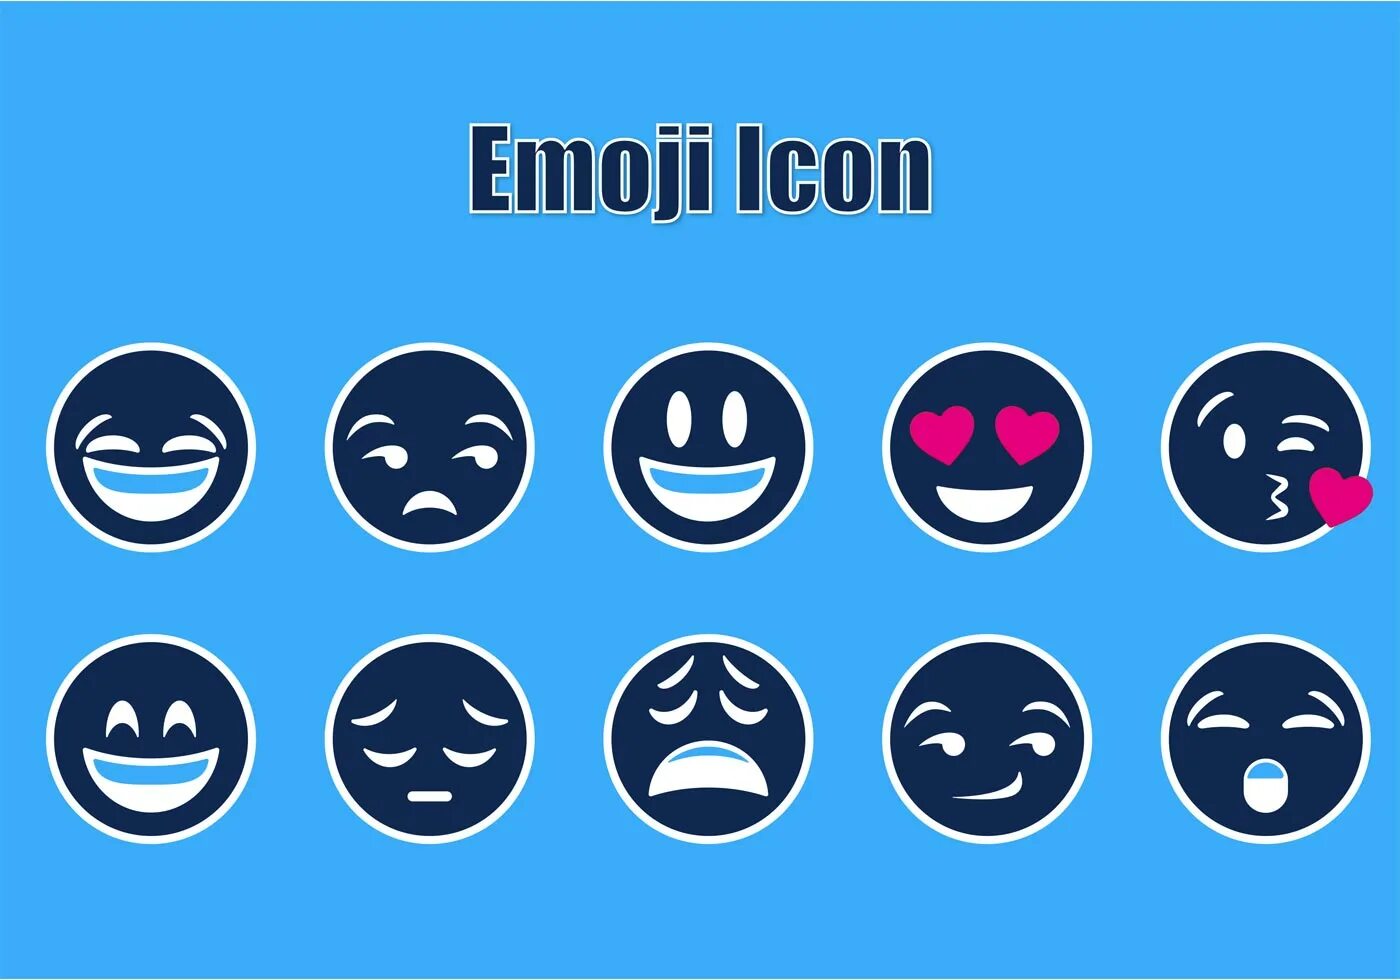 Emoji icons. Иконка ЭМОДЖИ. Векторные эмодзи. Векторные значки ЭМОДЖИ.